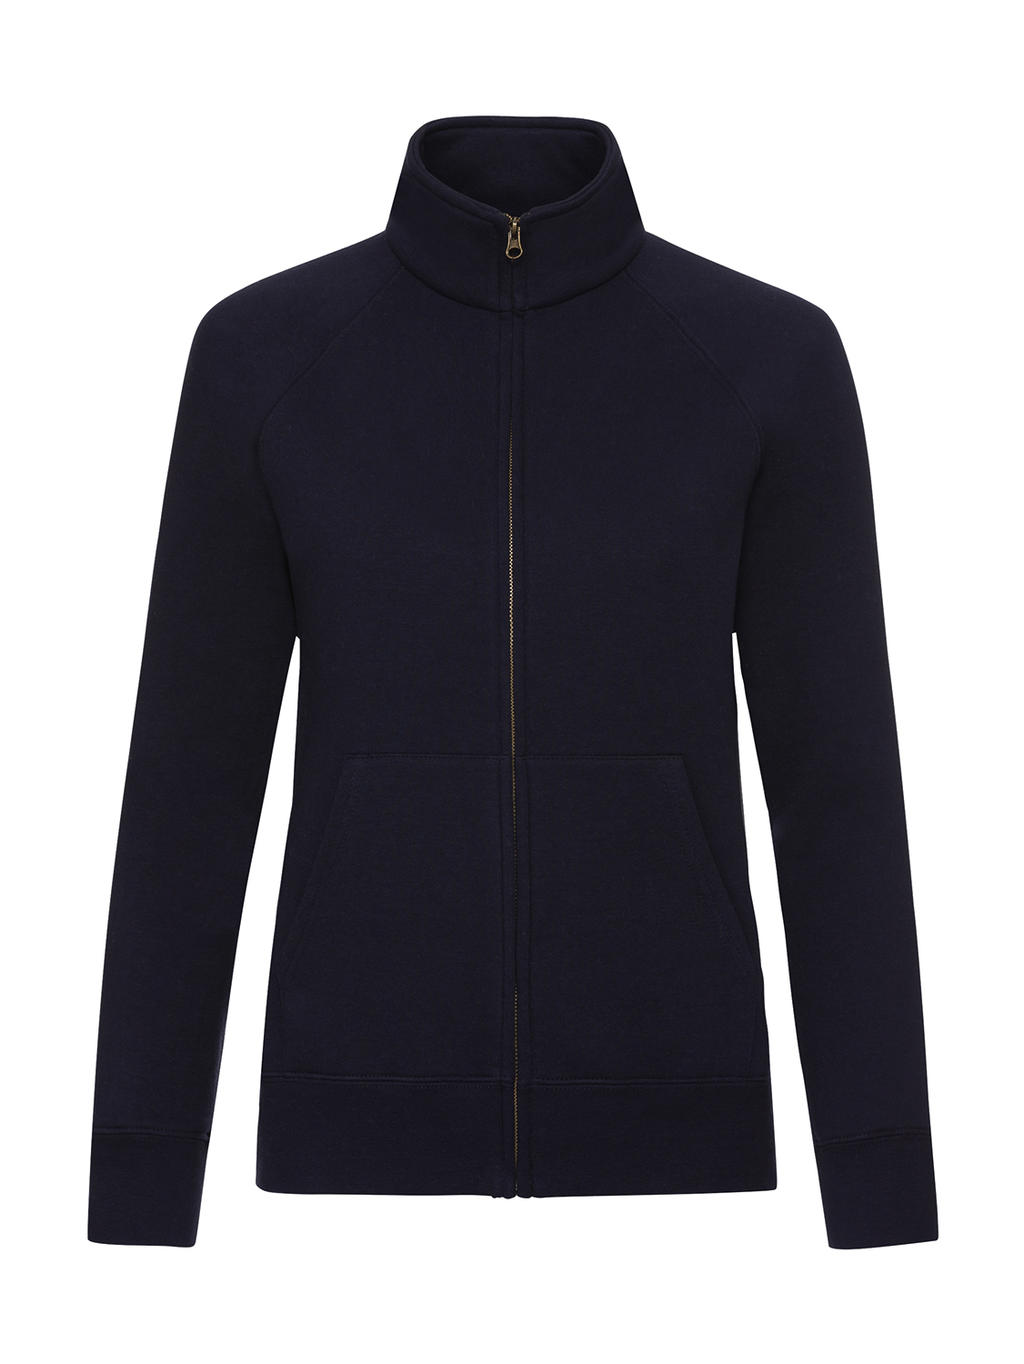  Ladies Premium Sweat Jacket in Farbe Deep Navy